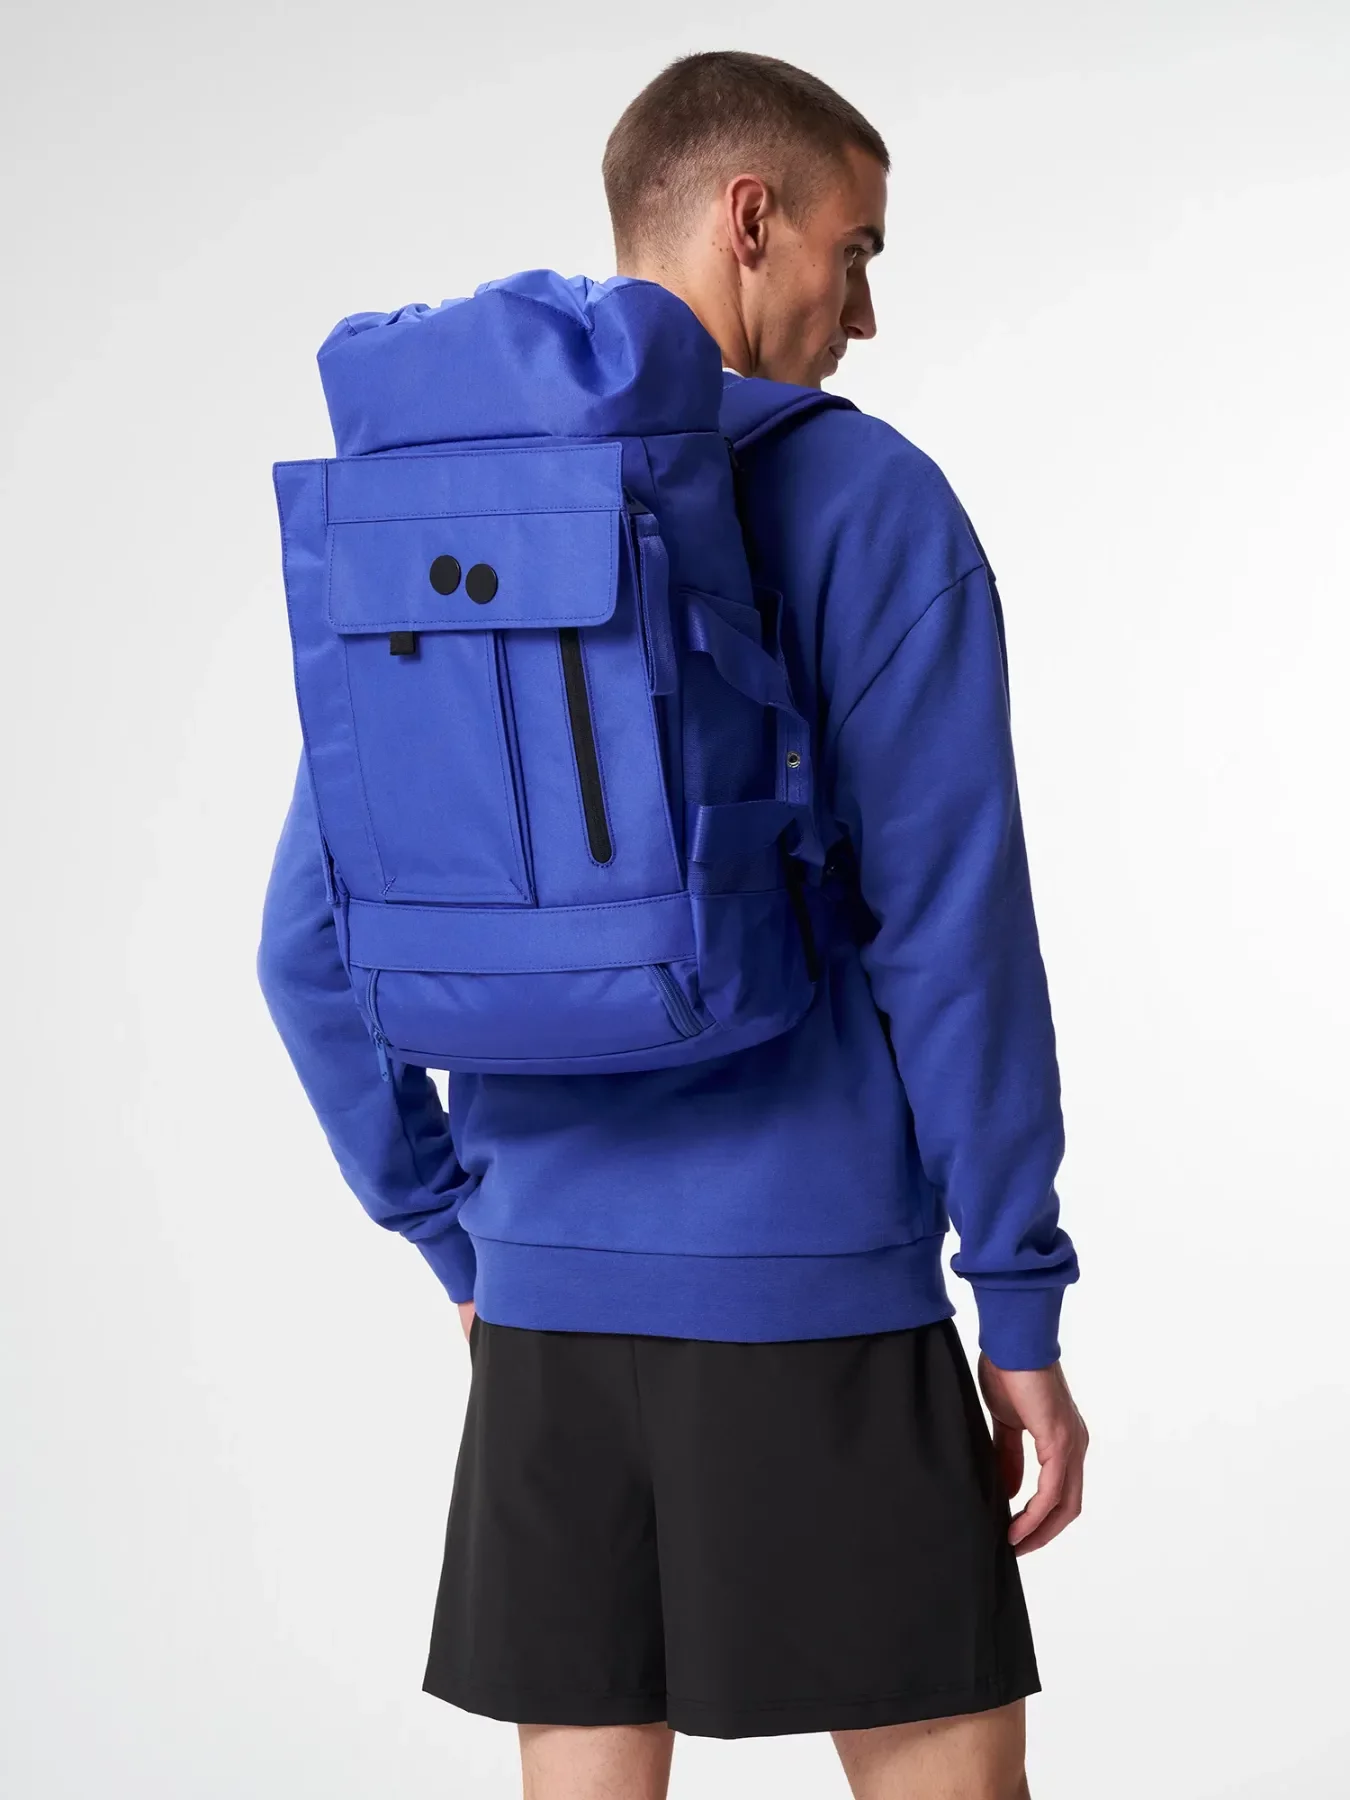 pinqponq Backpack BLOK medium Construct - Poppy Blue 14